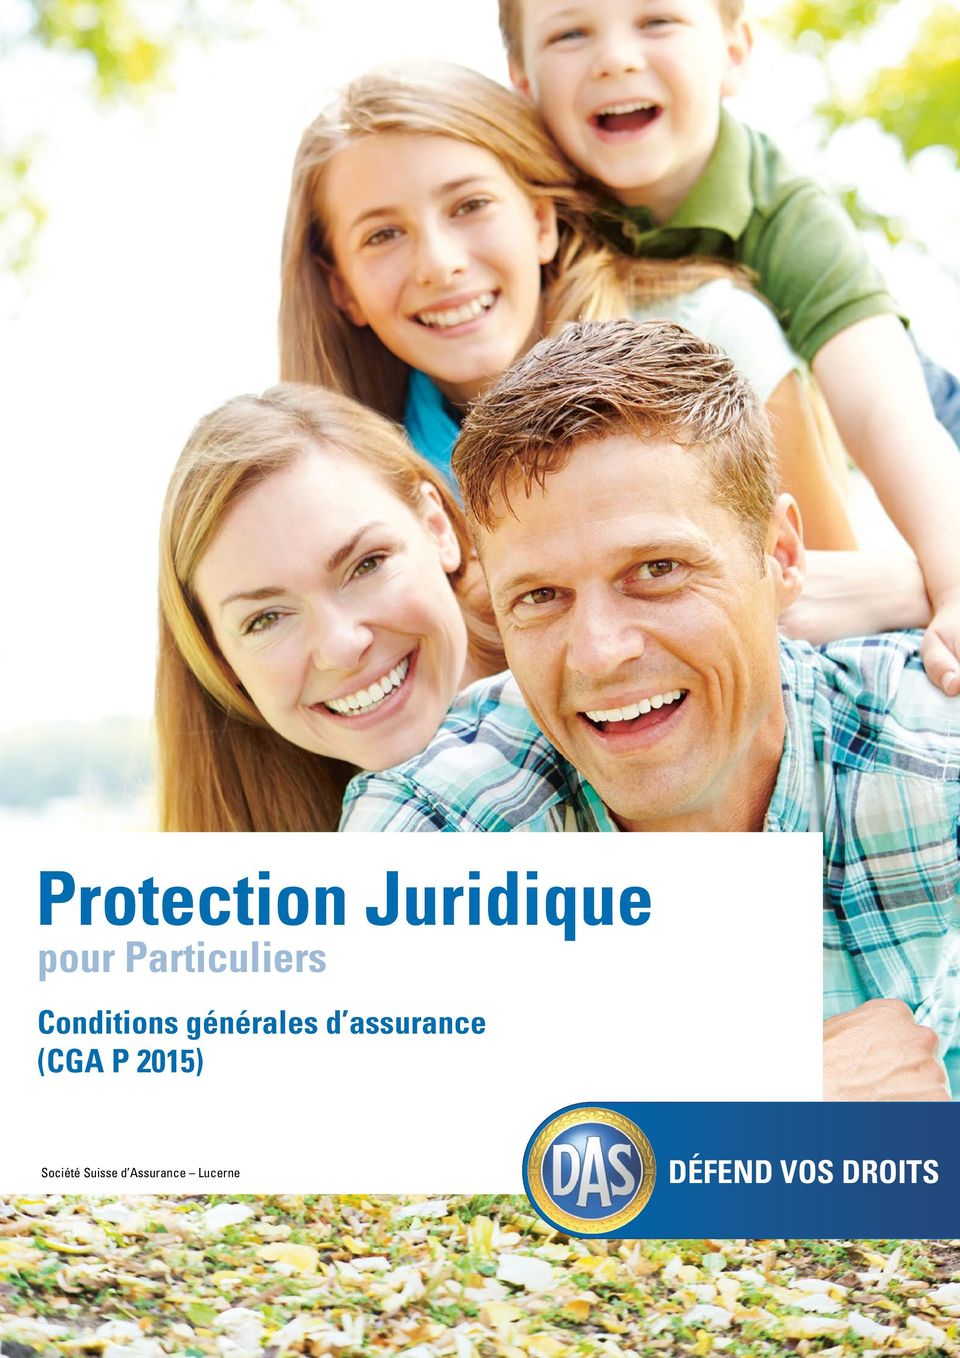 d assurance (CGA P 2015) Société